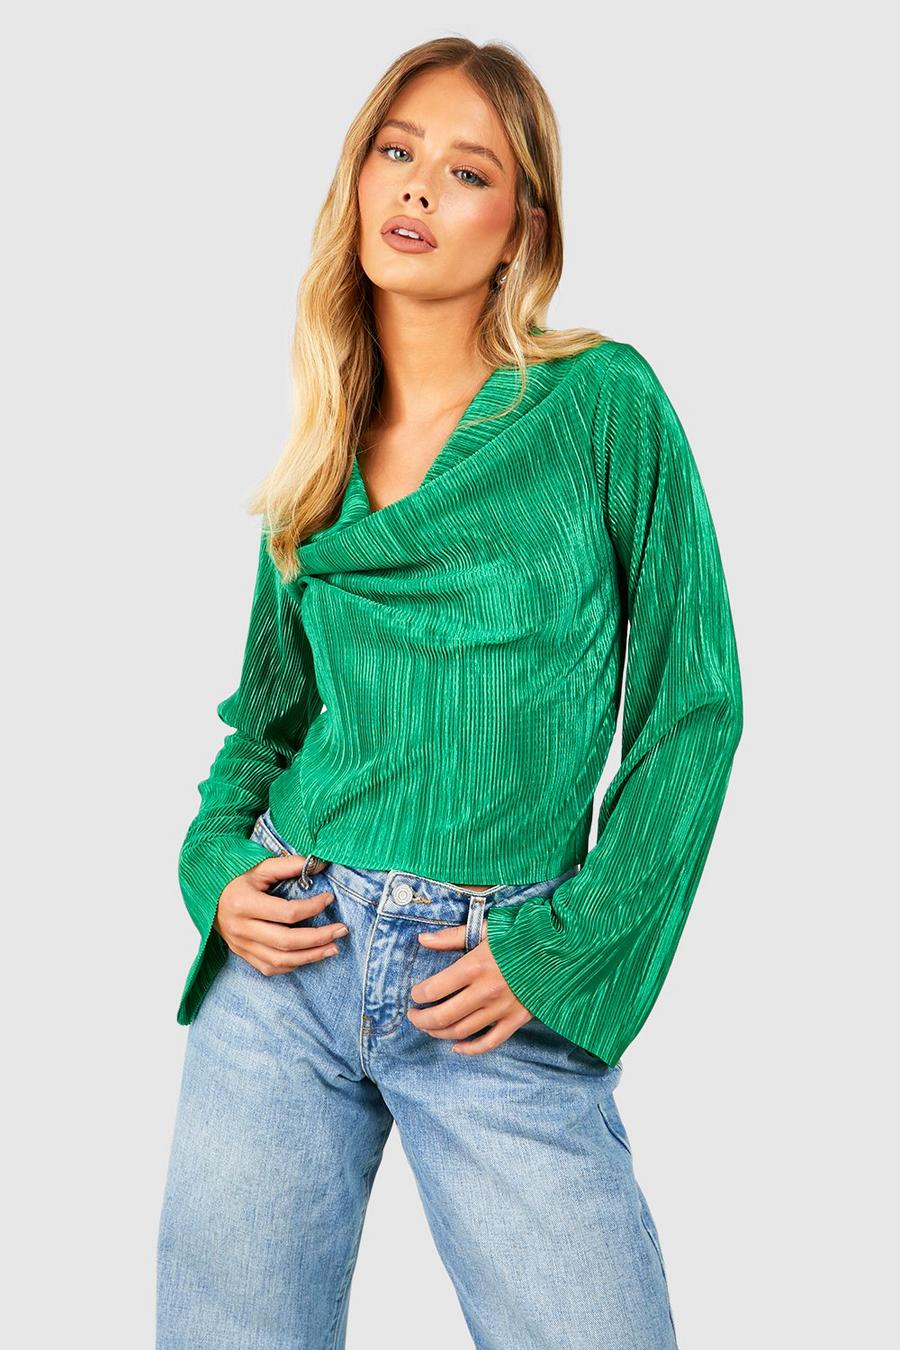 Jeansjacke mit Wasserfallausschnitt, Green